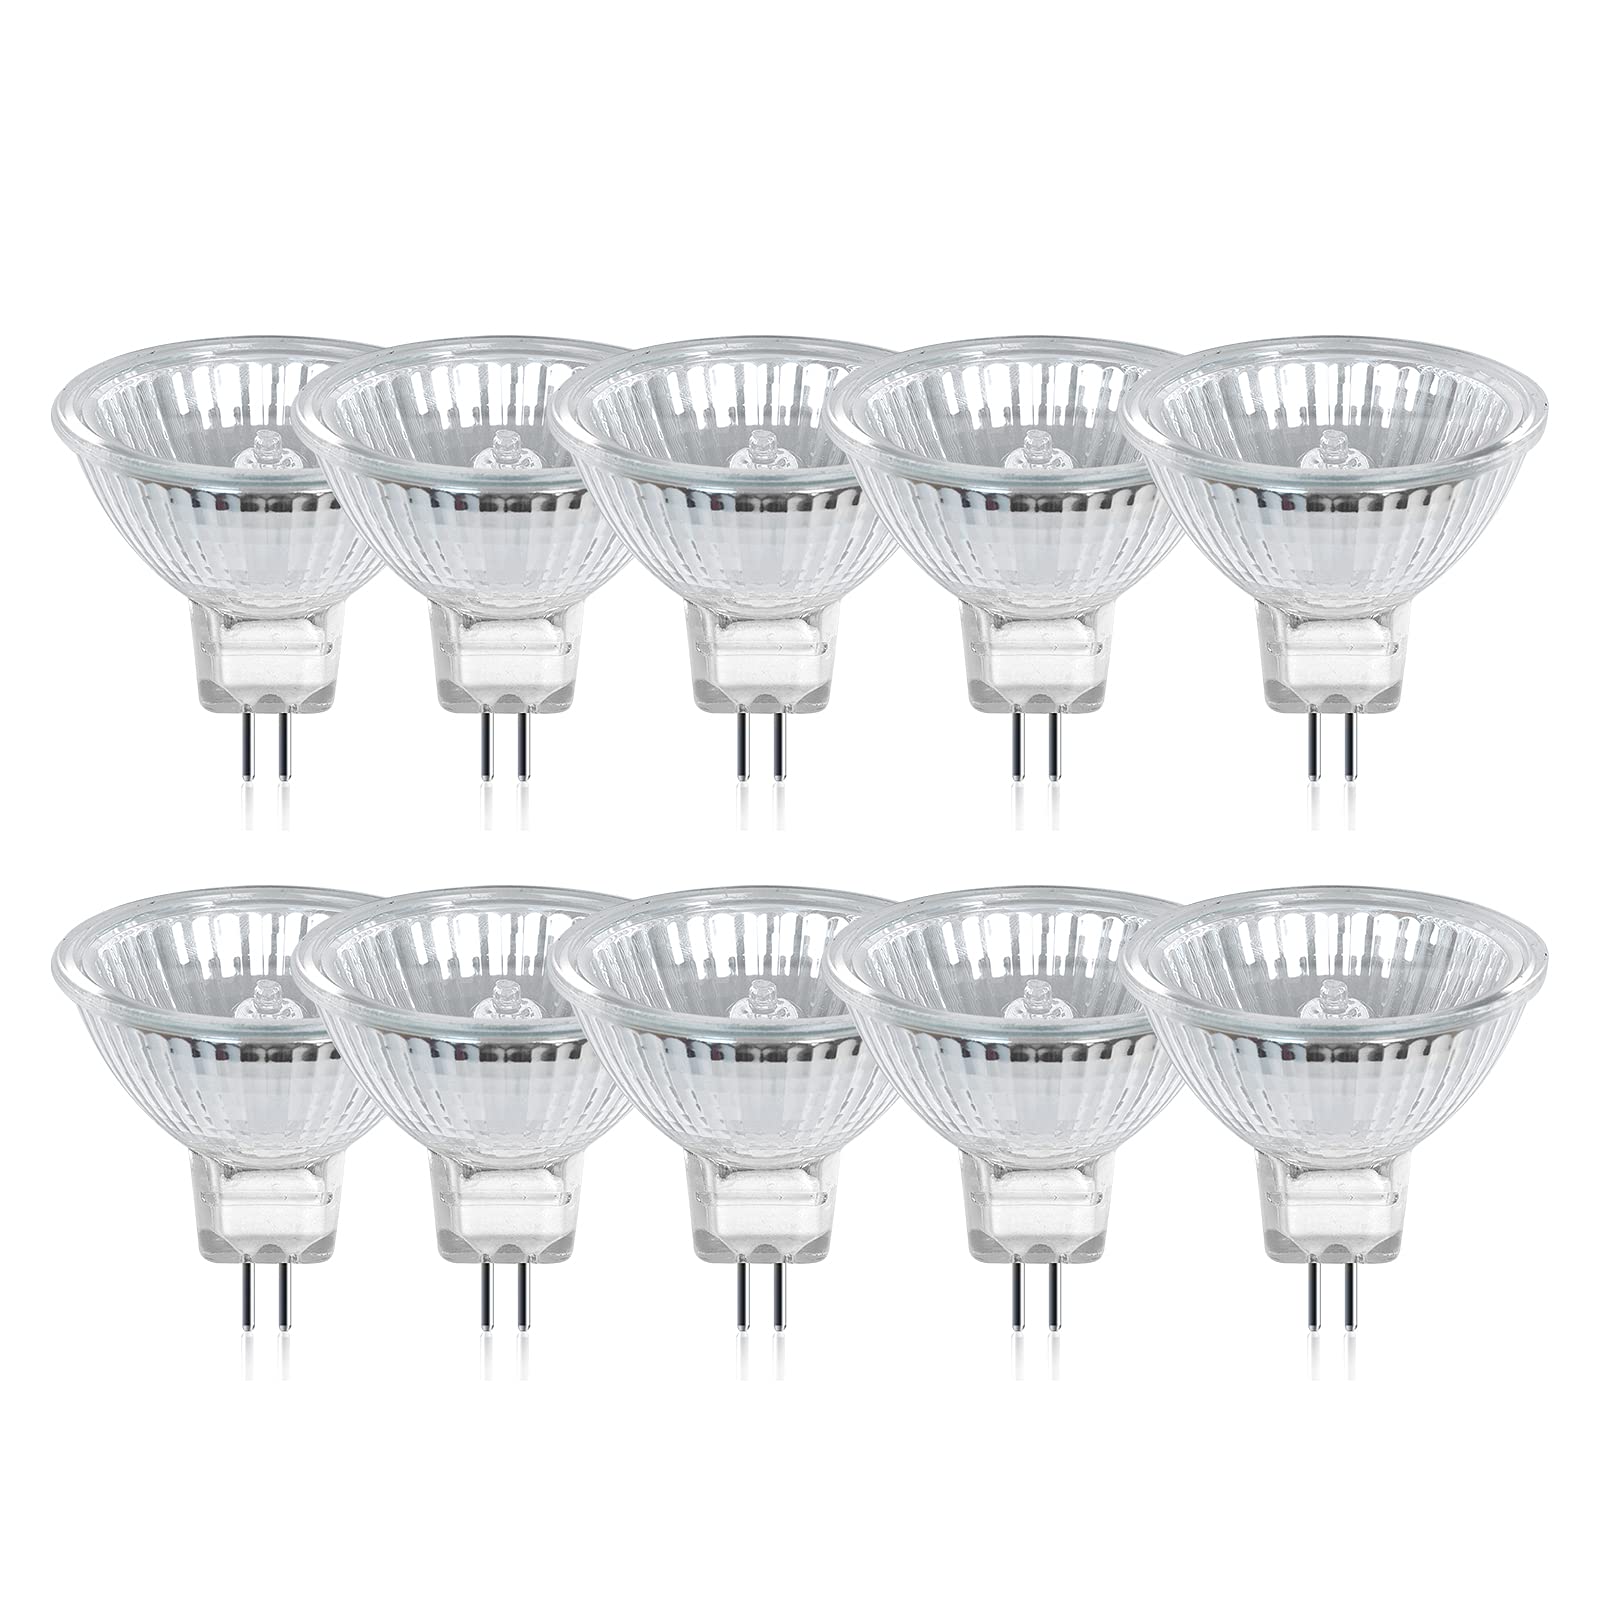 DoRight MR16 Halogen Bulbs 35W, 12V GU5.3 Halogen Spotlight Bulbs Dimmable, 2 Pin Base Low Voltage GU5.3 Bi-Pin Base Spot Light Reflector Lamp Warm White 2800K 550lm 30° Beam Angle (10-Pack)